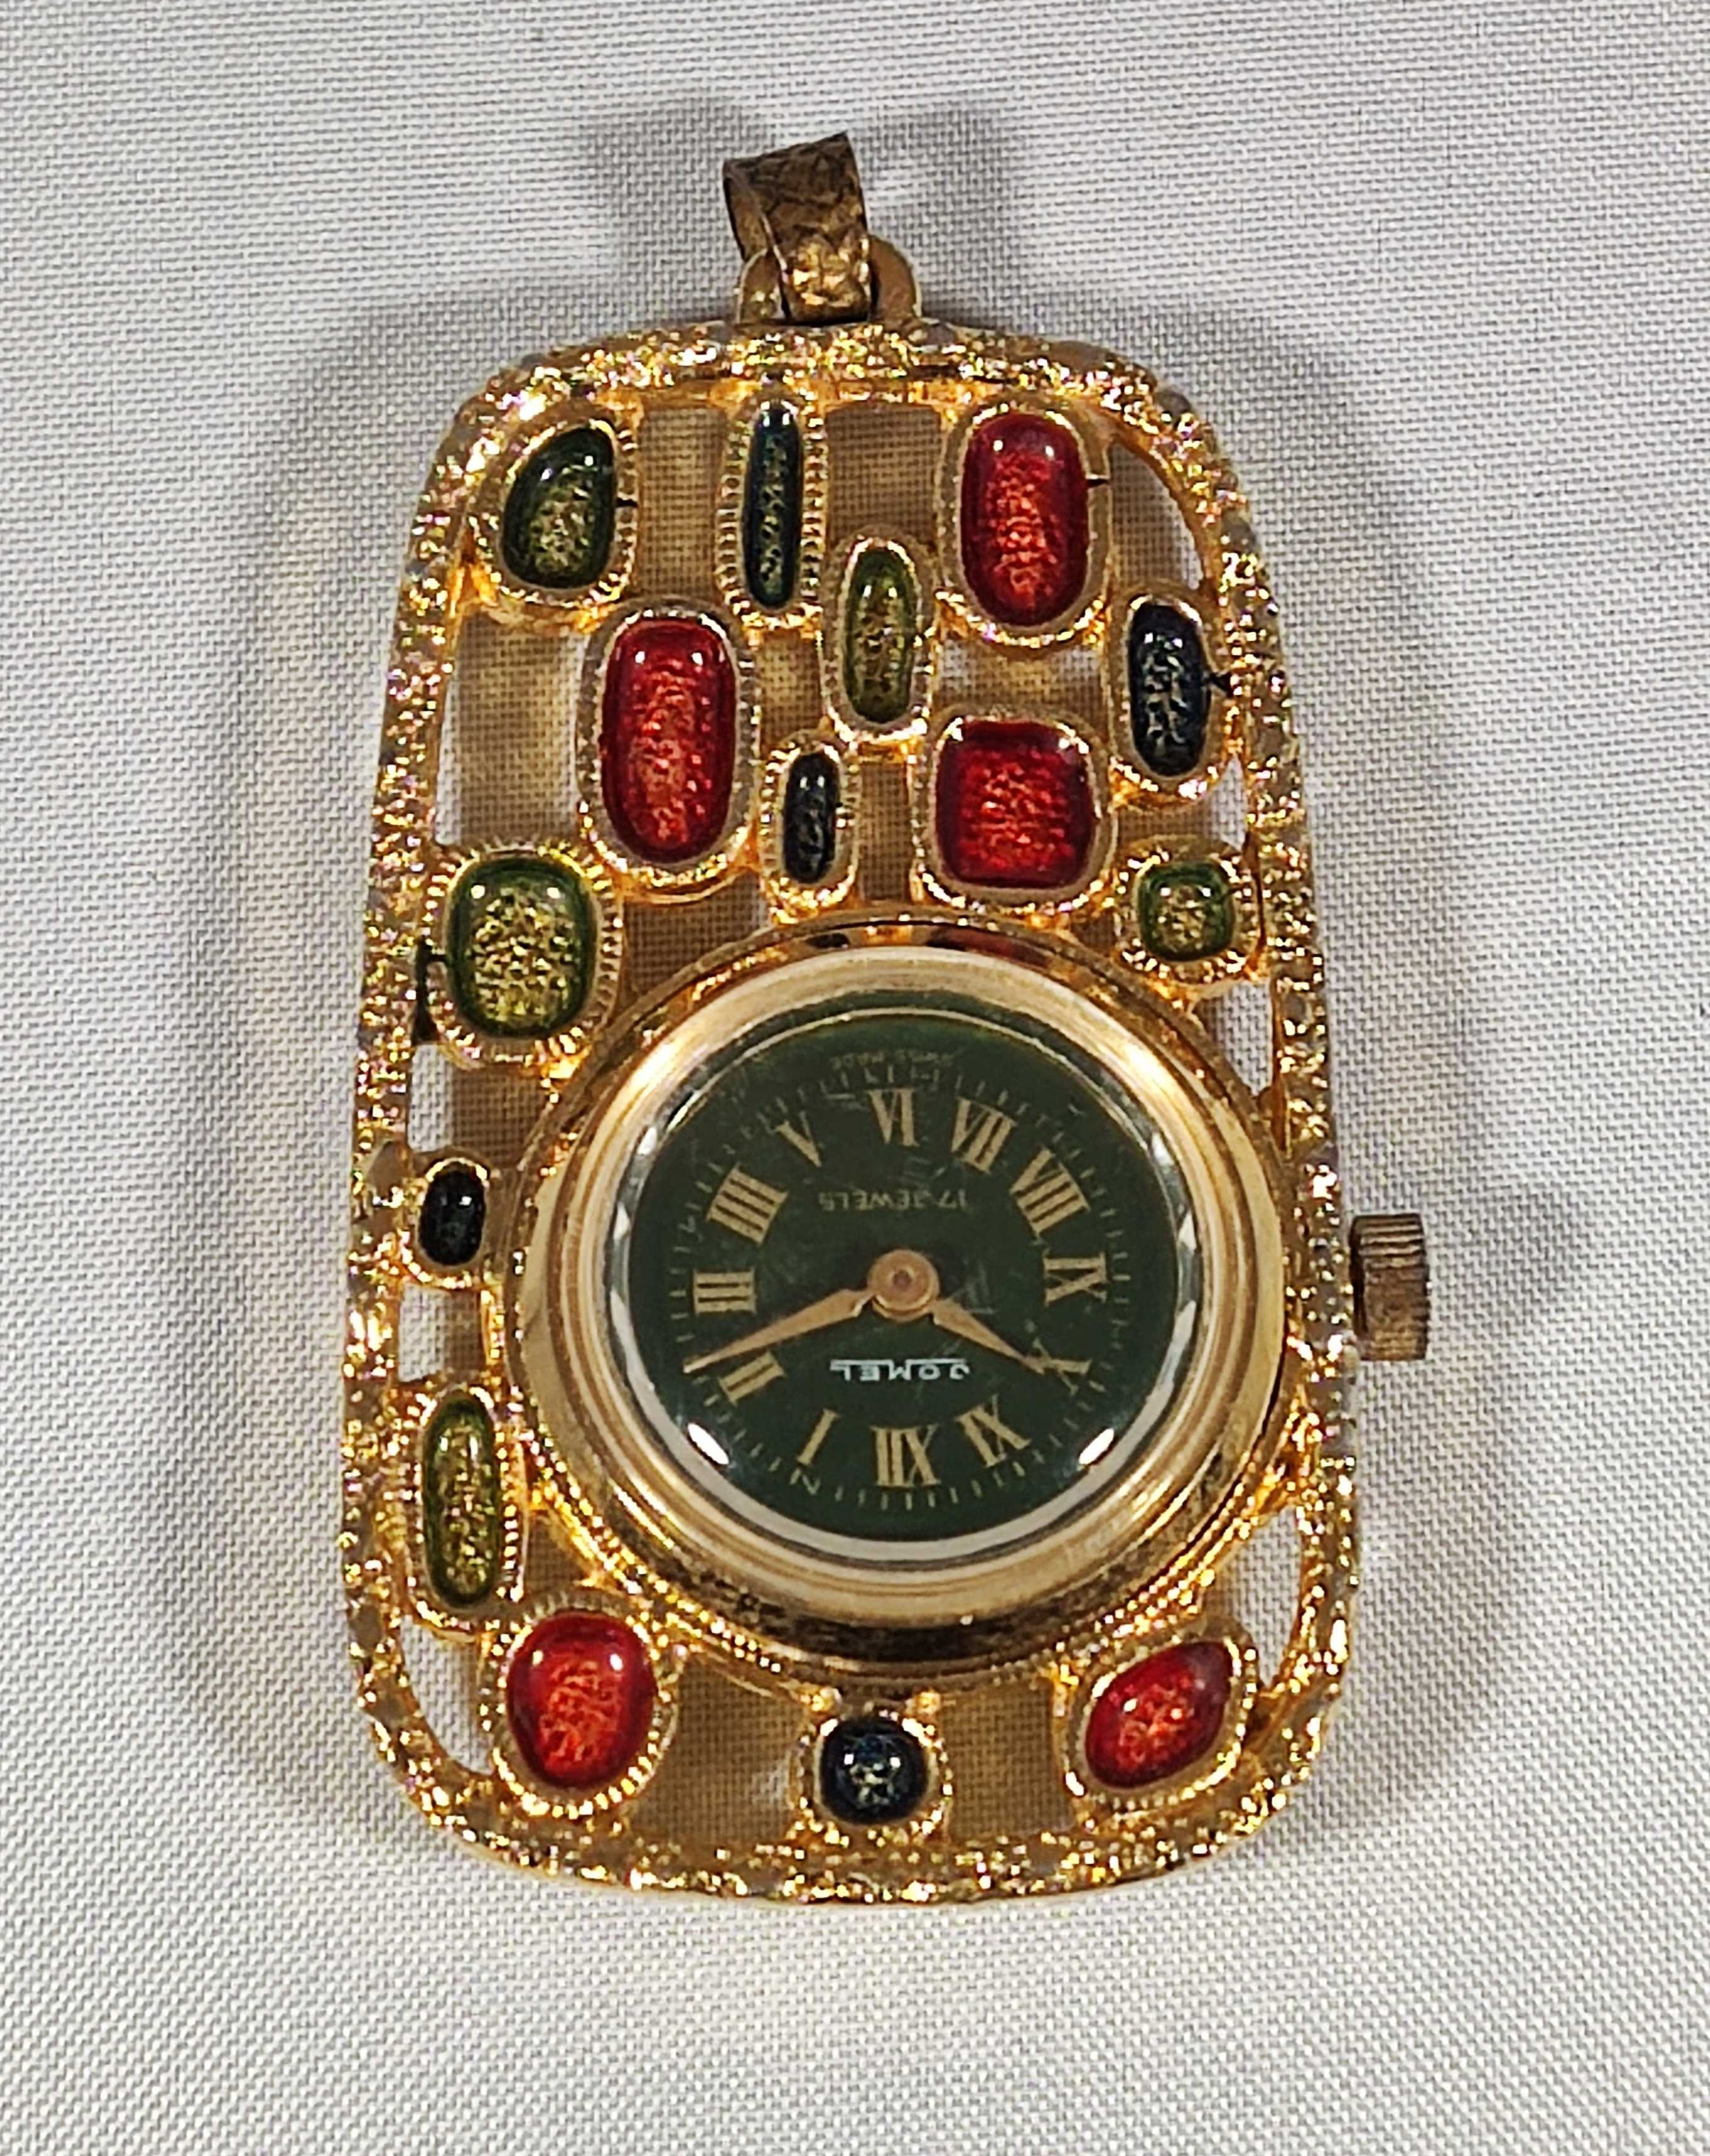 Relógio antigo de enfermeira